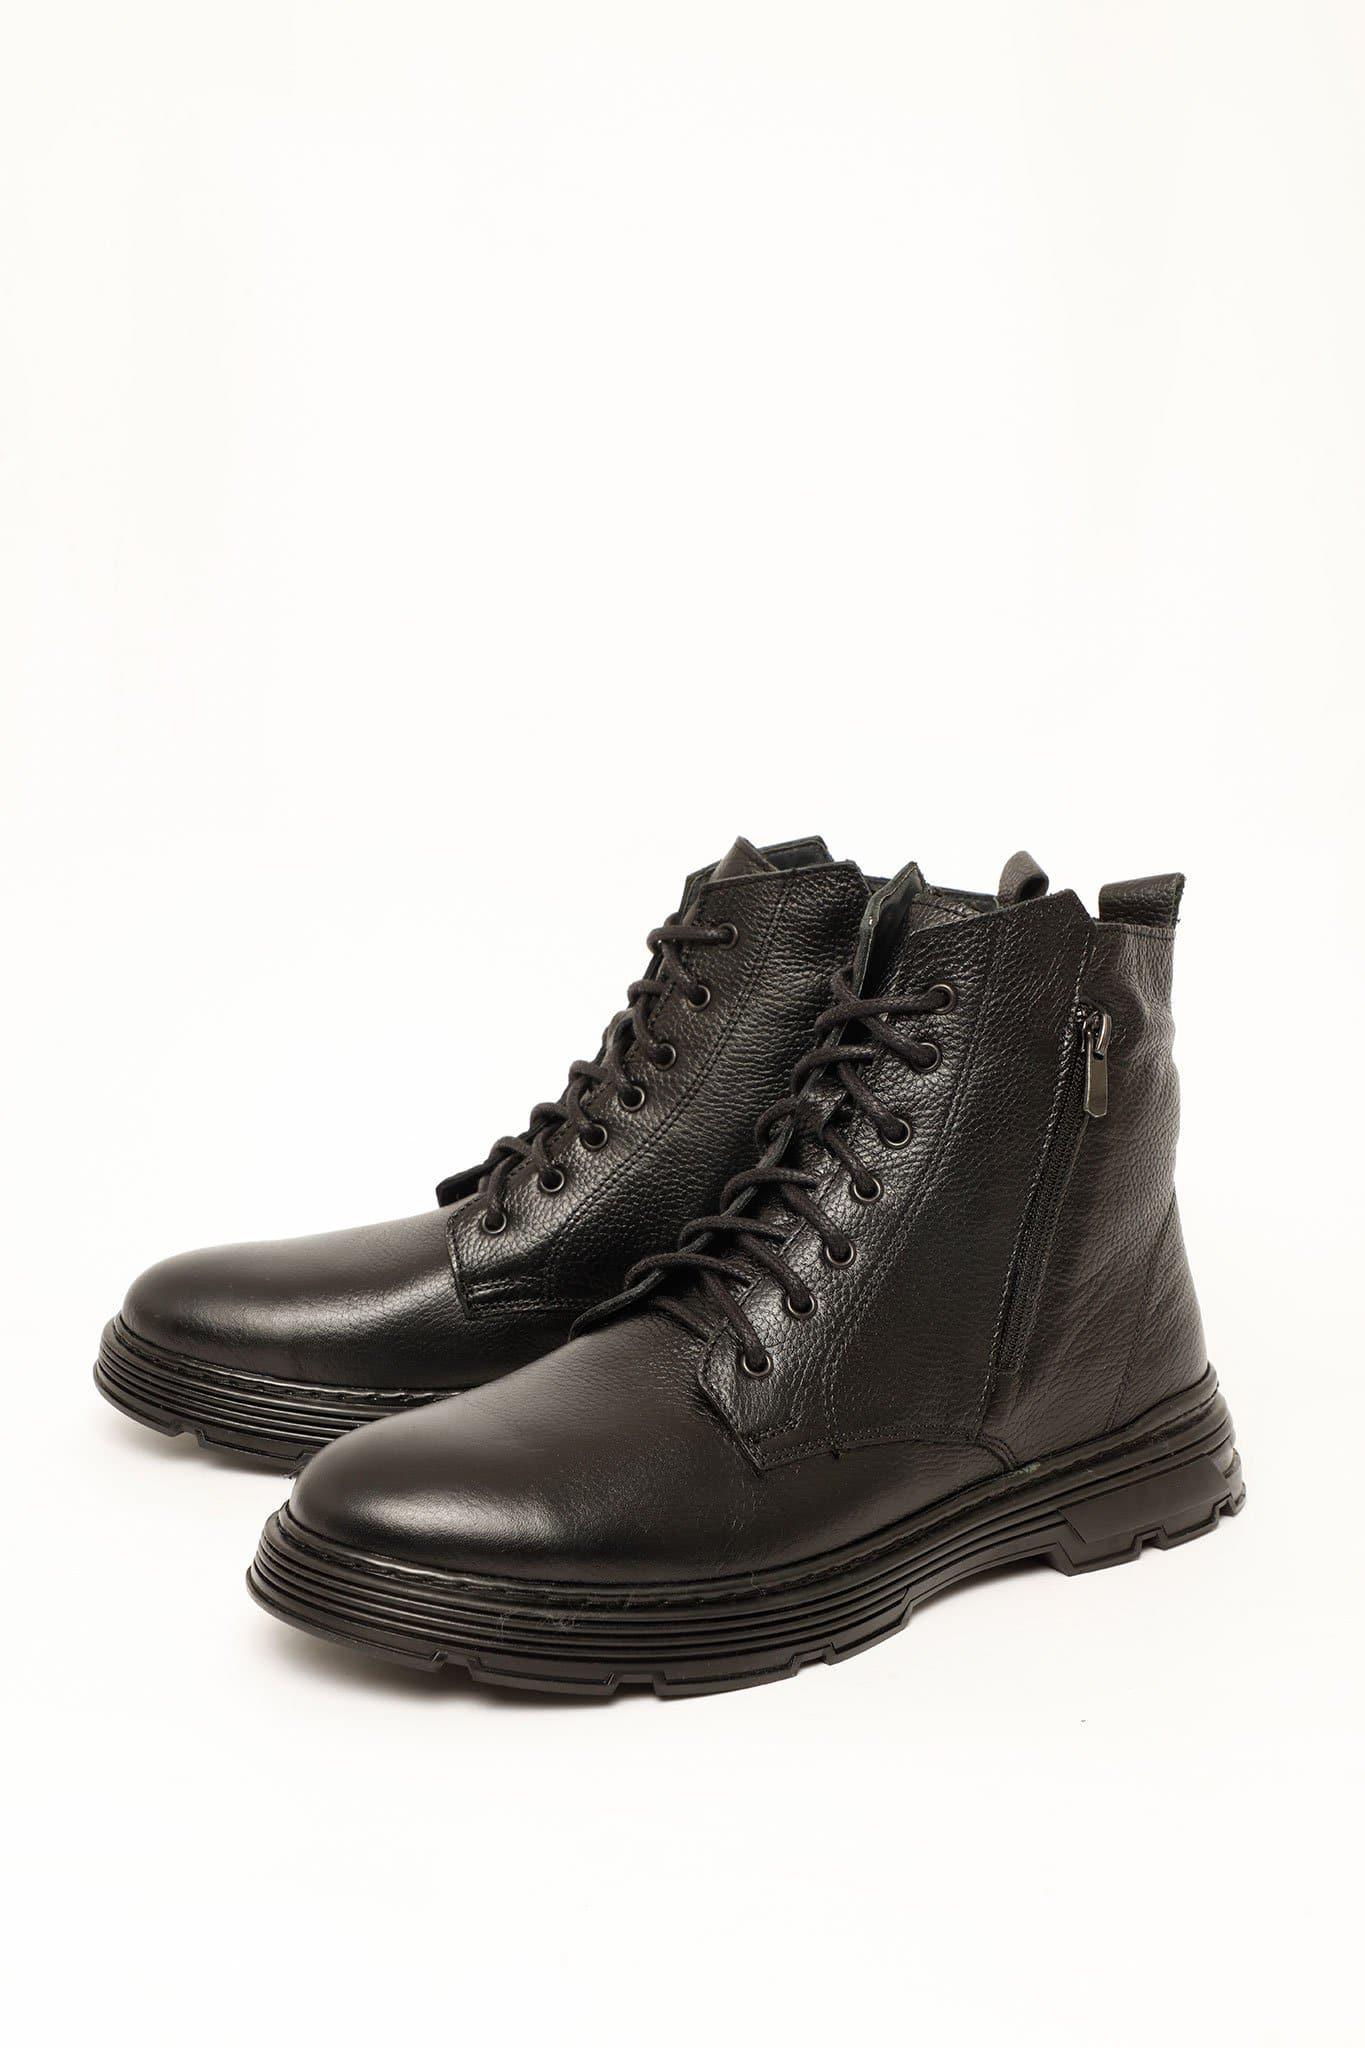 PB FAS BOOTS 10605B, SHOE, CORADO, black, boots, leather, men, shoe, coradomoda, coradomoda.com